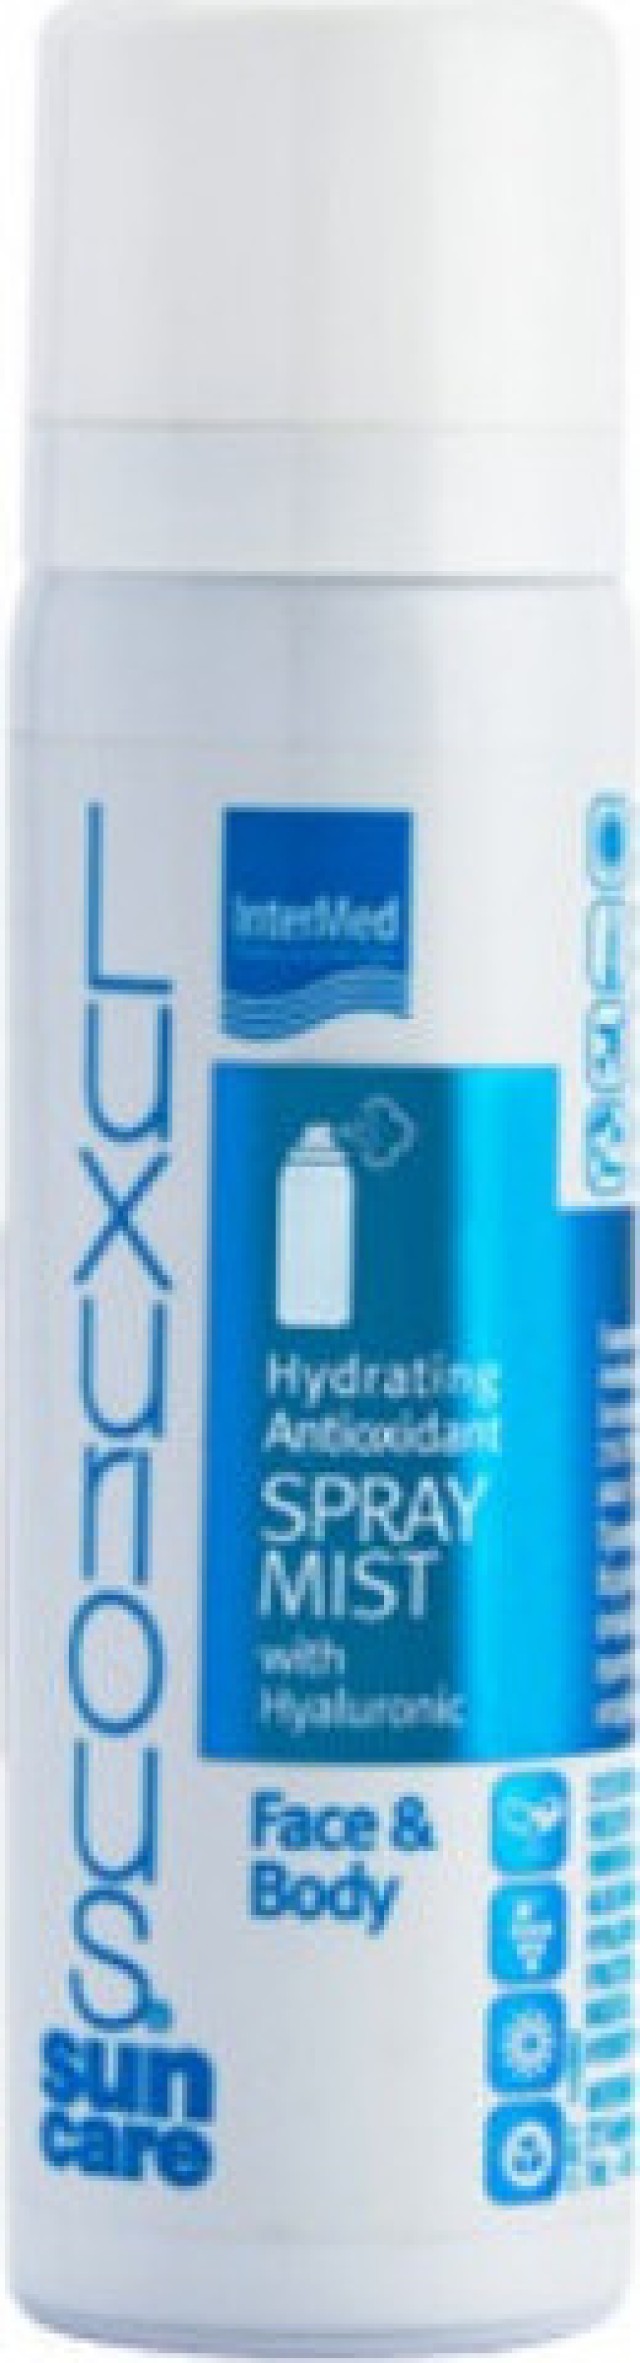 Intermed Luxurious Sunscreen Hydrating Face & Body Mist 50ml